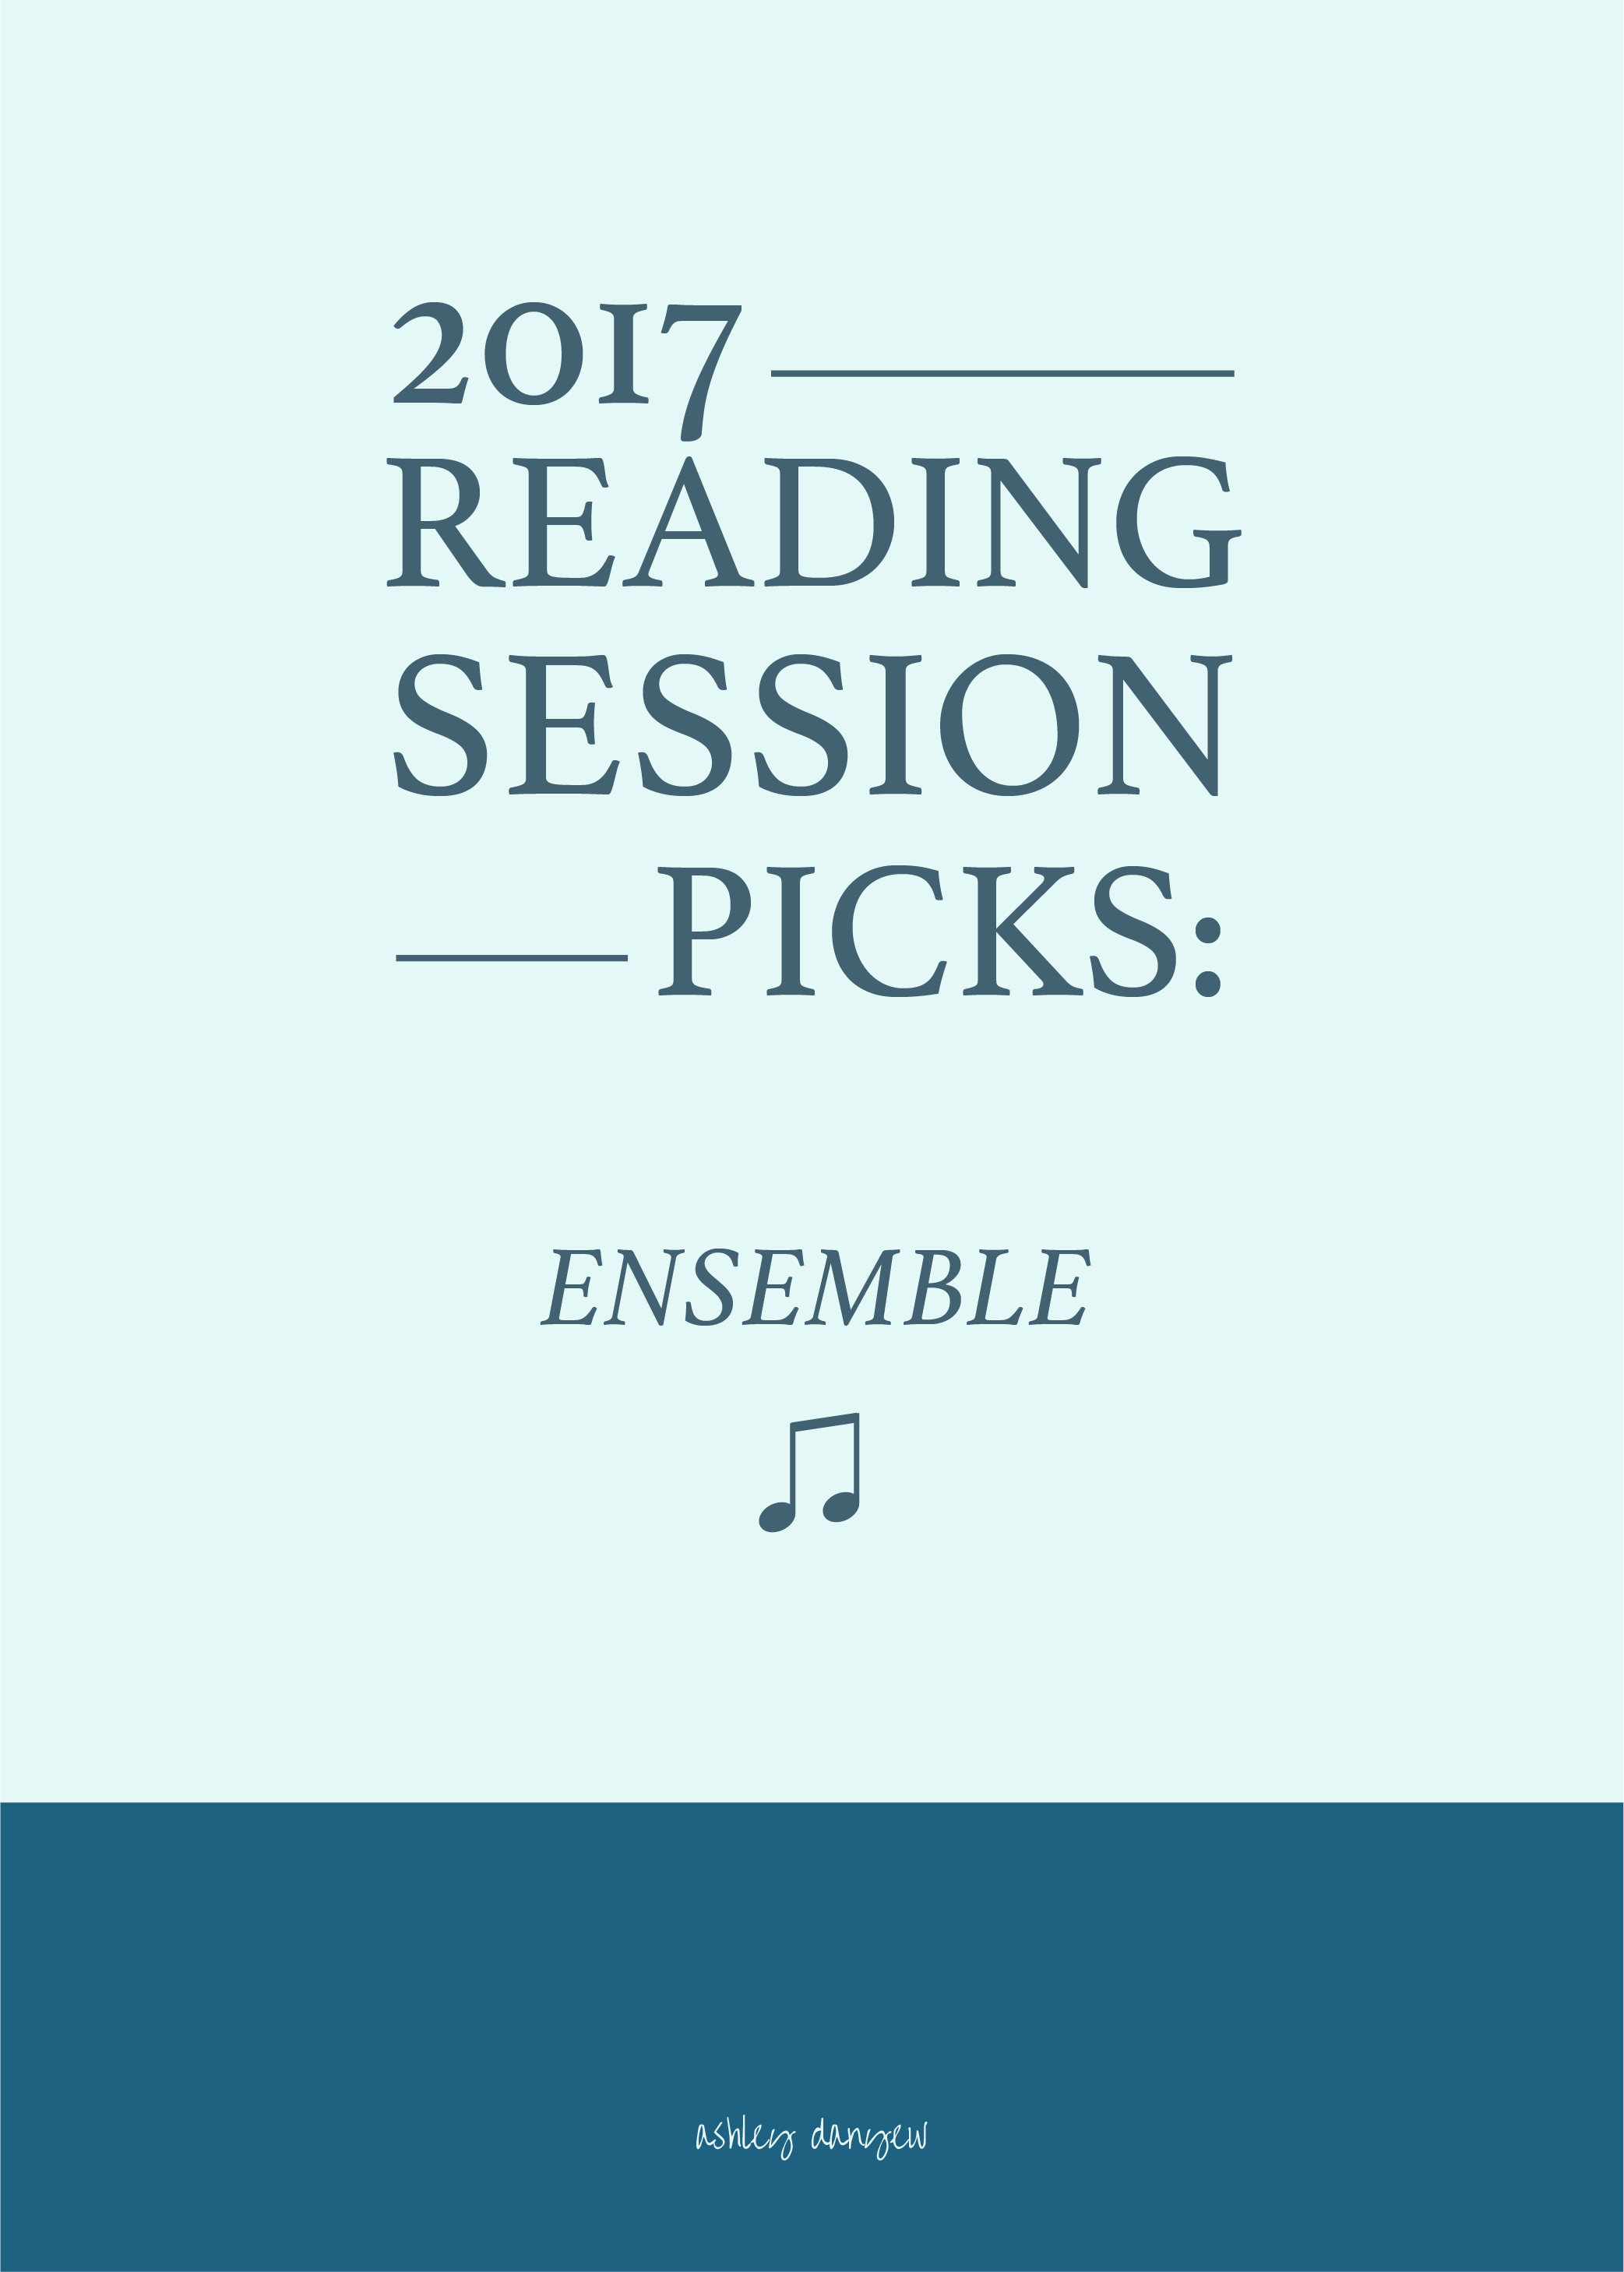 Copy of 2017 Reading Session Picks: Ensemble